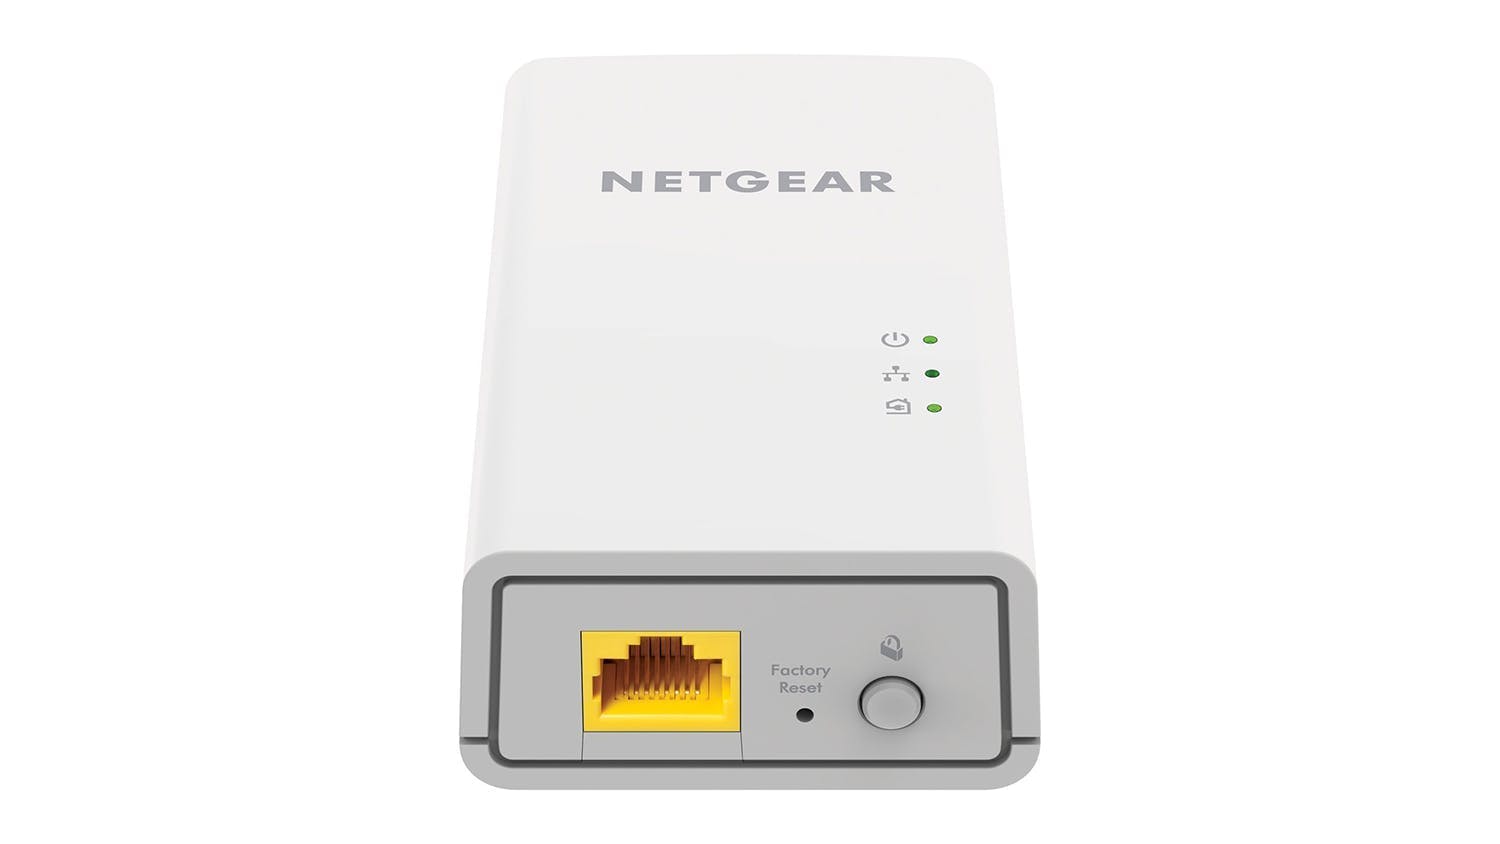 Netgear Powerline 1000 Network Adapter